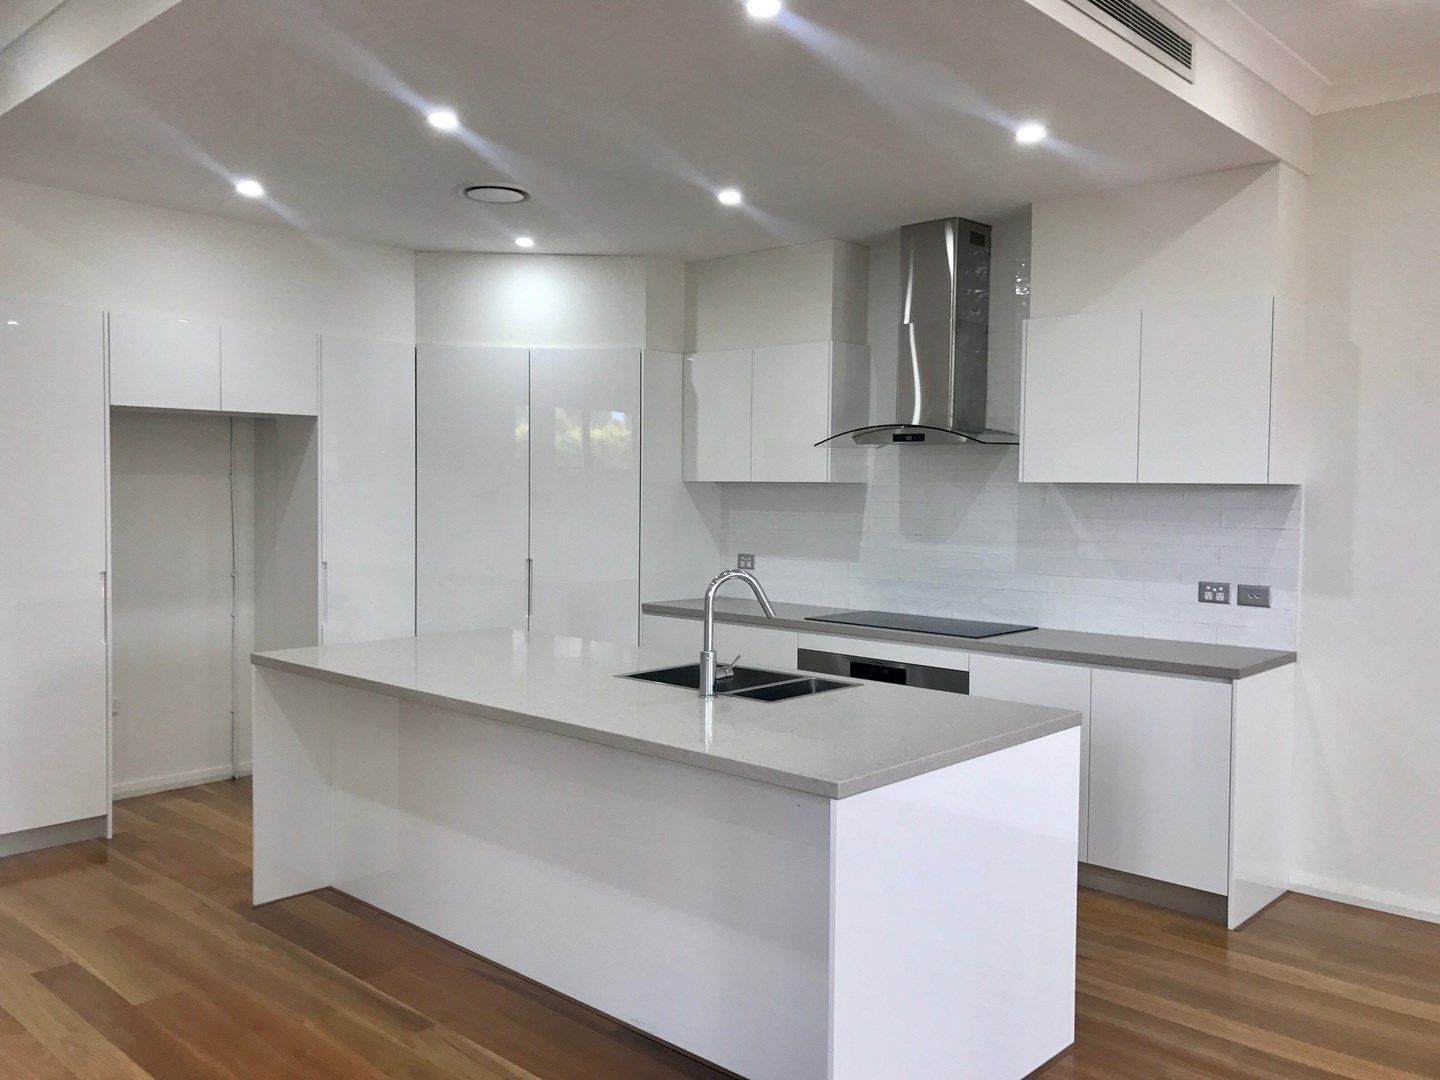 4 bedrooms House in 8a Clarke Street PEAKHURST NSW, 2210